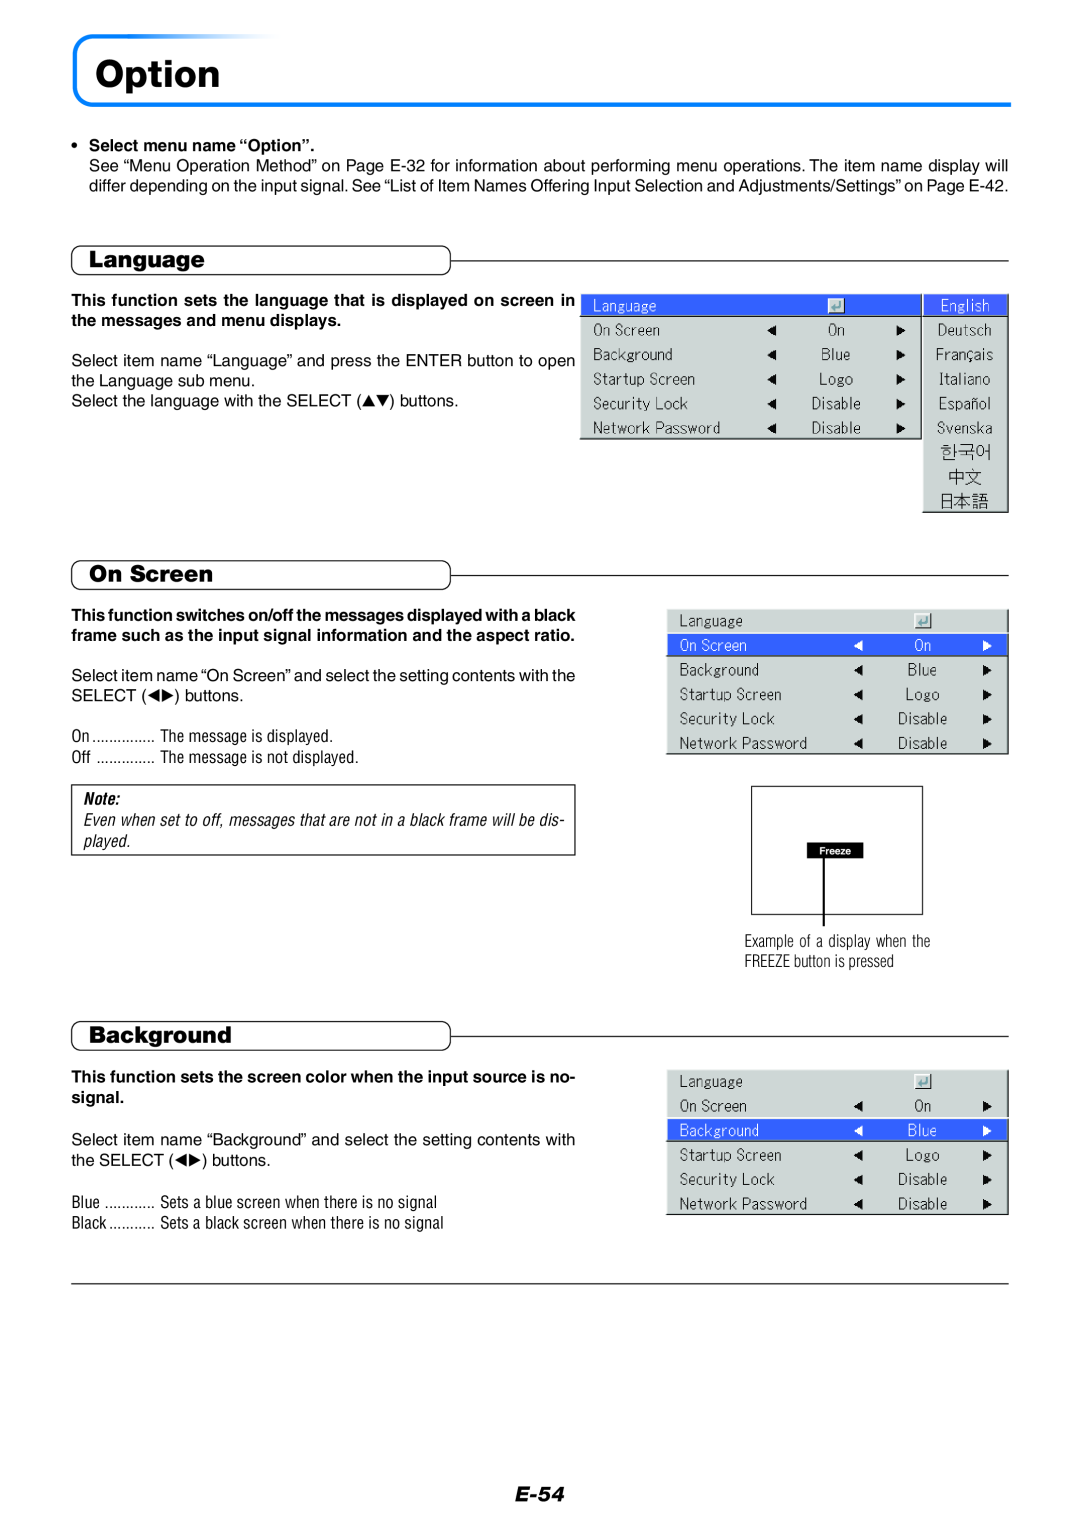 PLUS Vision U7-137, U7-132h user manual Option, Language, On Screen, Background, E-54 